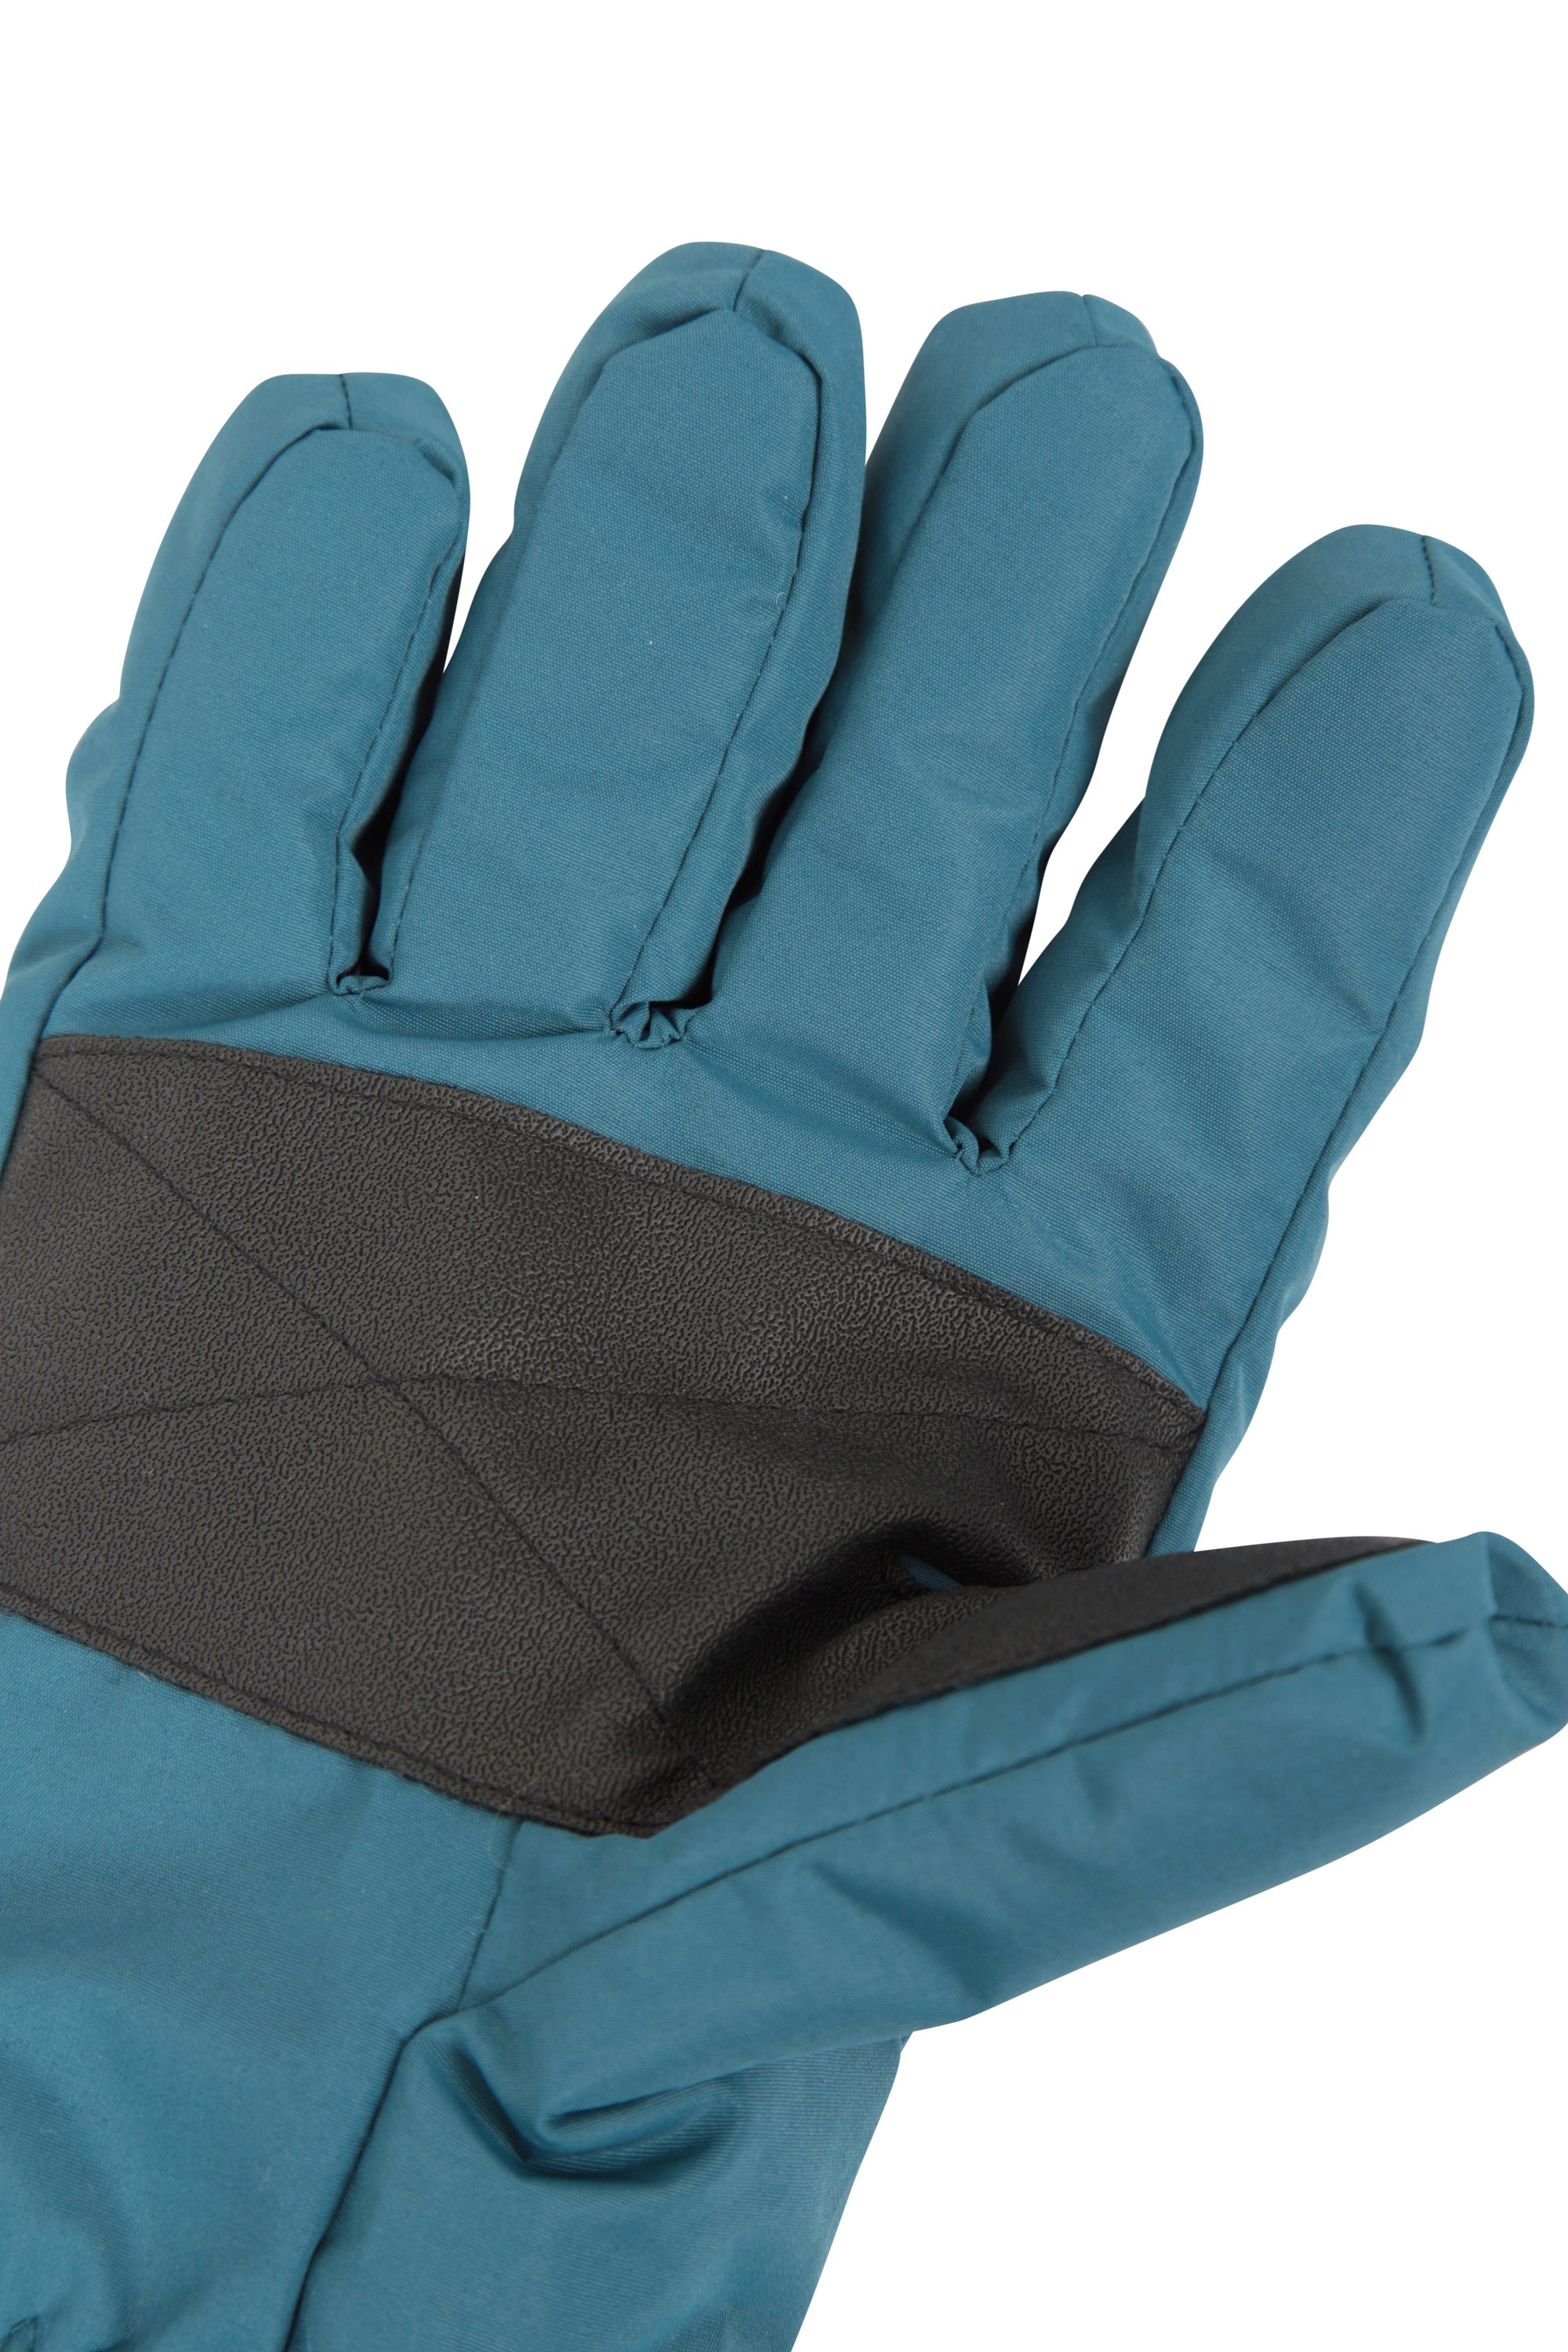 Mountain Warehouse Lodge Mens Ski Gloves - Grey | Size XL